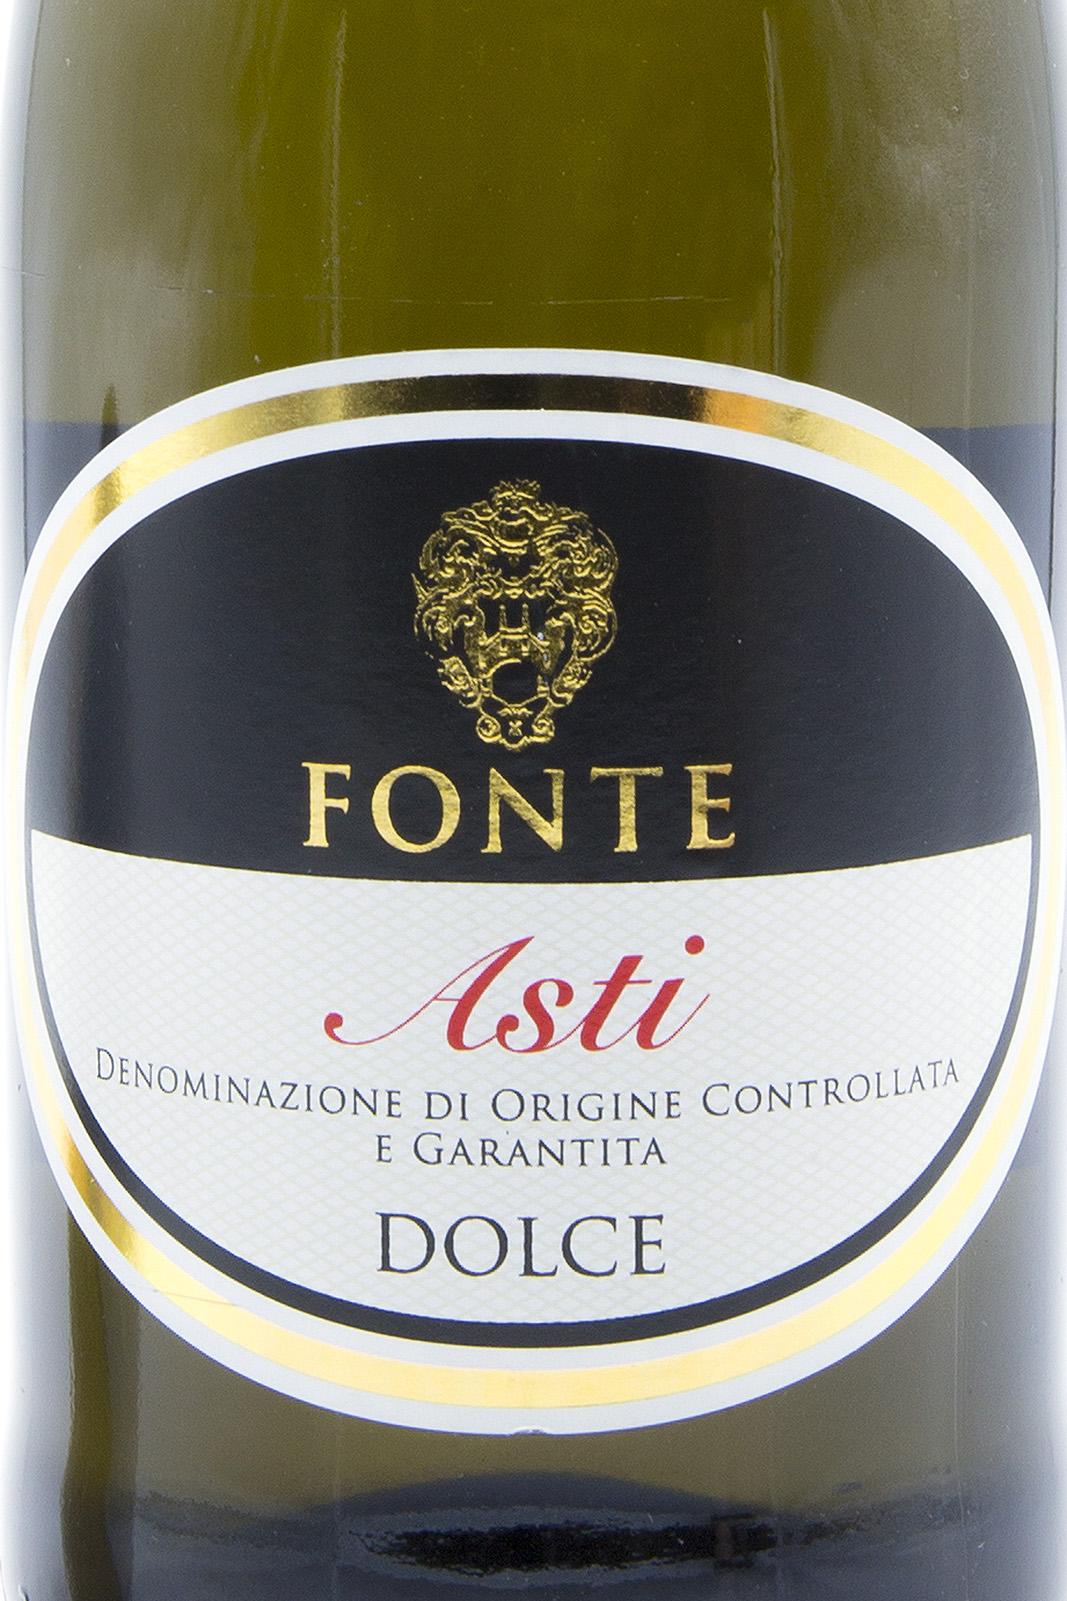 Prosecco fonte шампанское. Асти Фонте вино игристое. Вино игристое Асти Фонте белое сладкое. Асти Фонте 0.75 л. Асти Фонте белое сладкое.